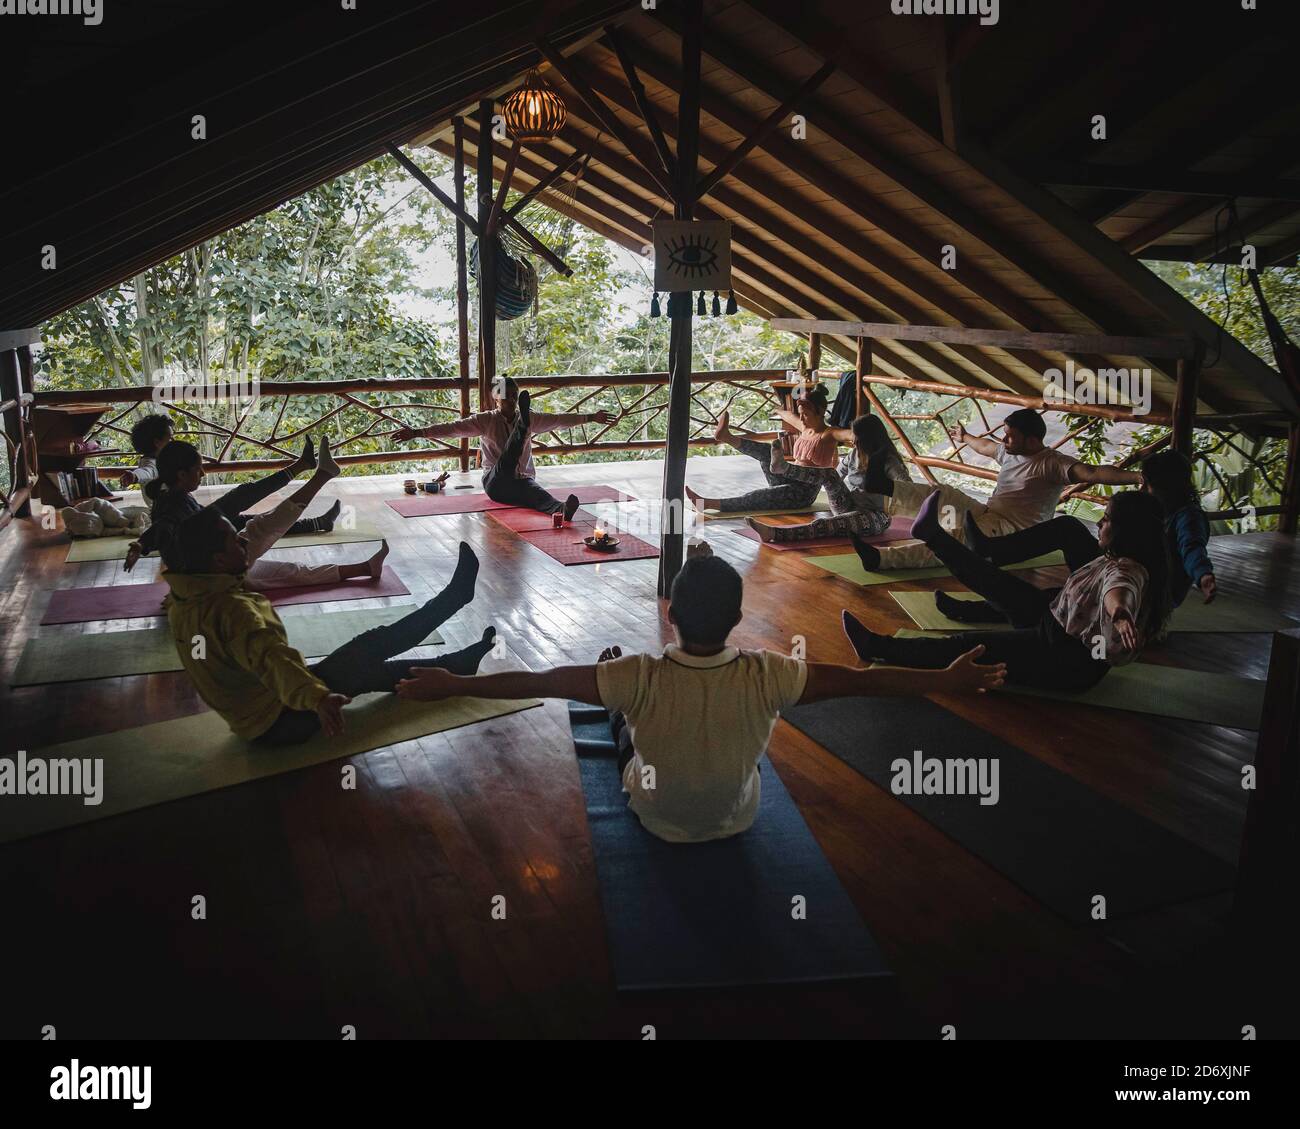 Amazon Jungle yoga retreat Stock Photo